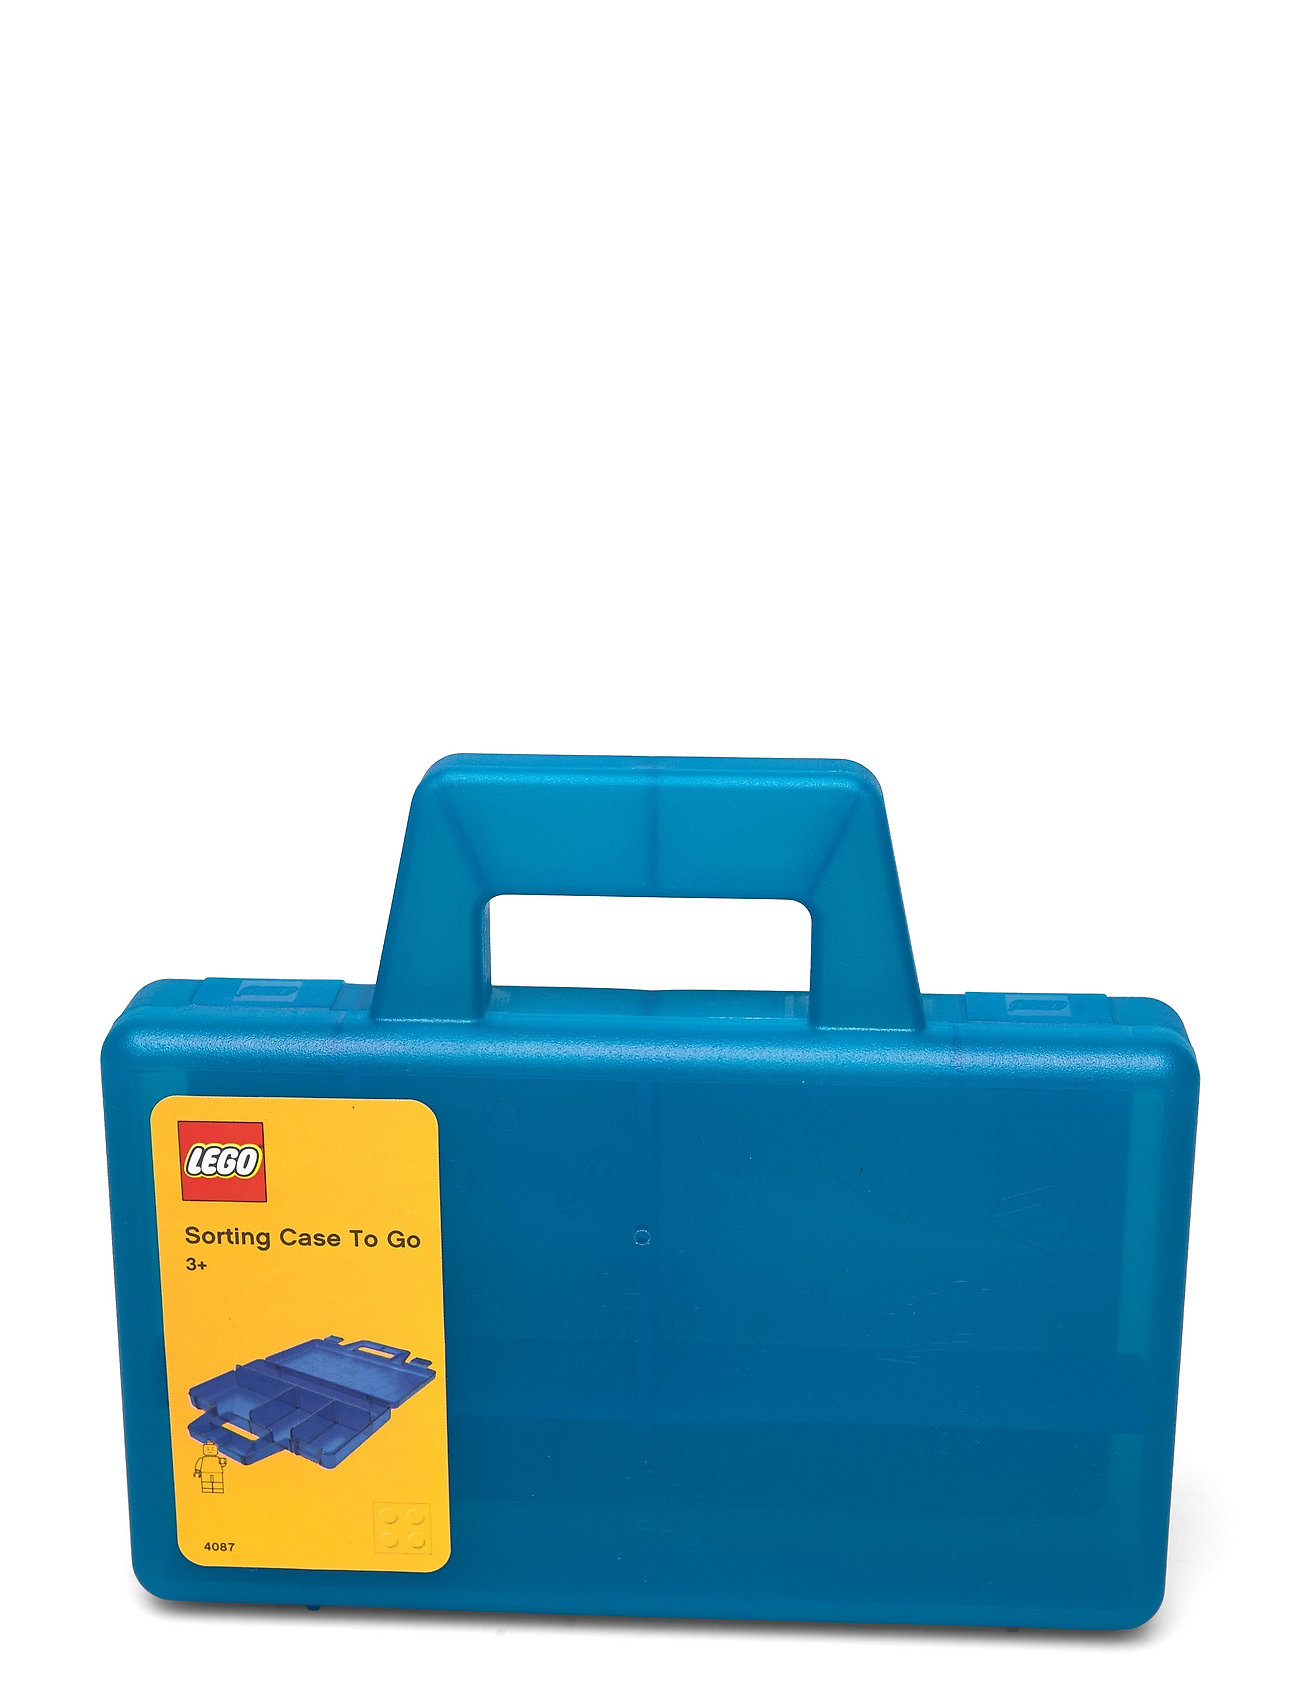 Lego Sorting Box To Go Home Kids Decor Storage Storage Boxes Blue LEGO STORAGE